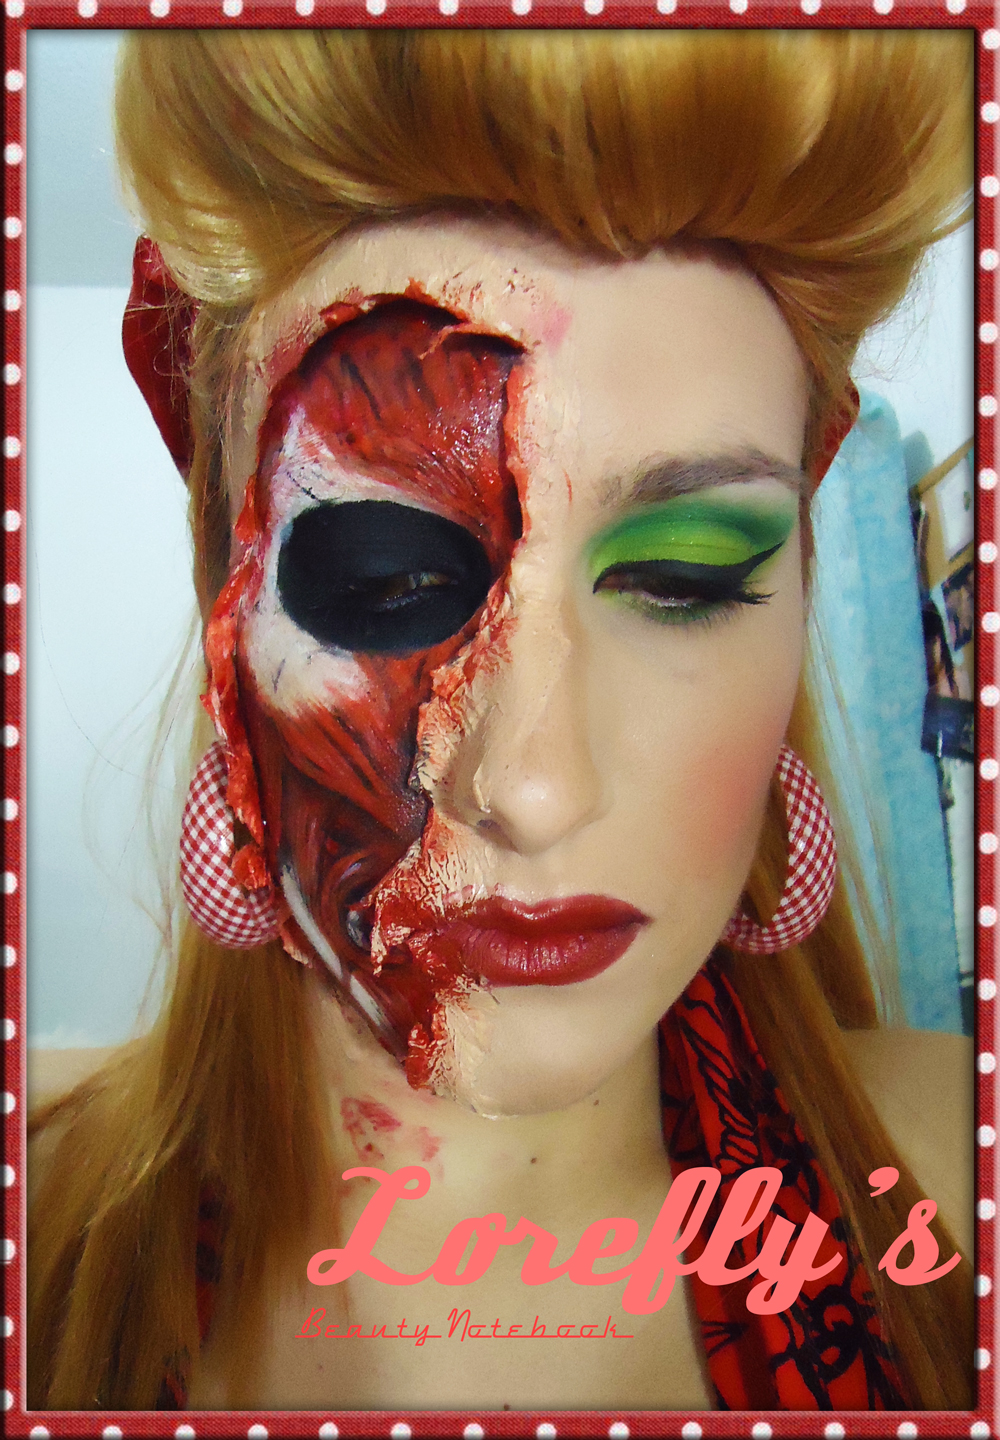 Lorefly S Beauty Notebook Halloween Makeup Pin Up